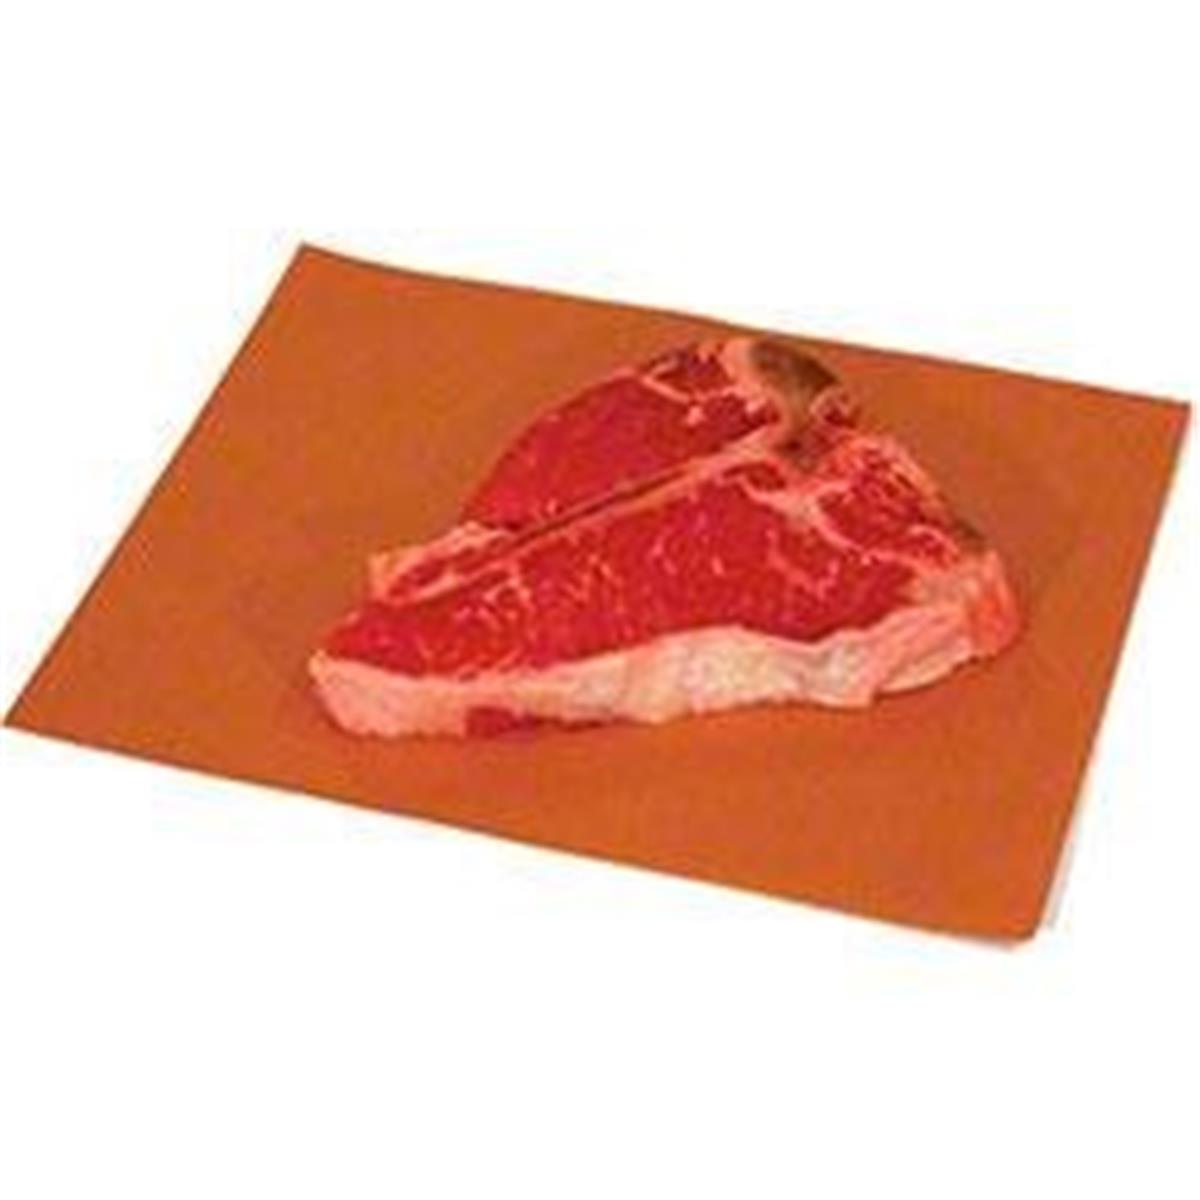 Picture of Gordon Paper PST1230 CPC 12 x 30 in. Steak Paper Sheet, Peach - Case of 1000